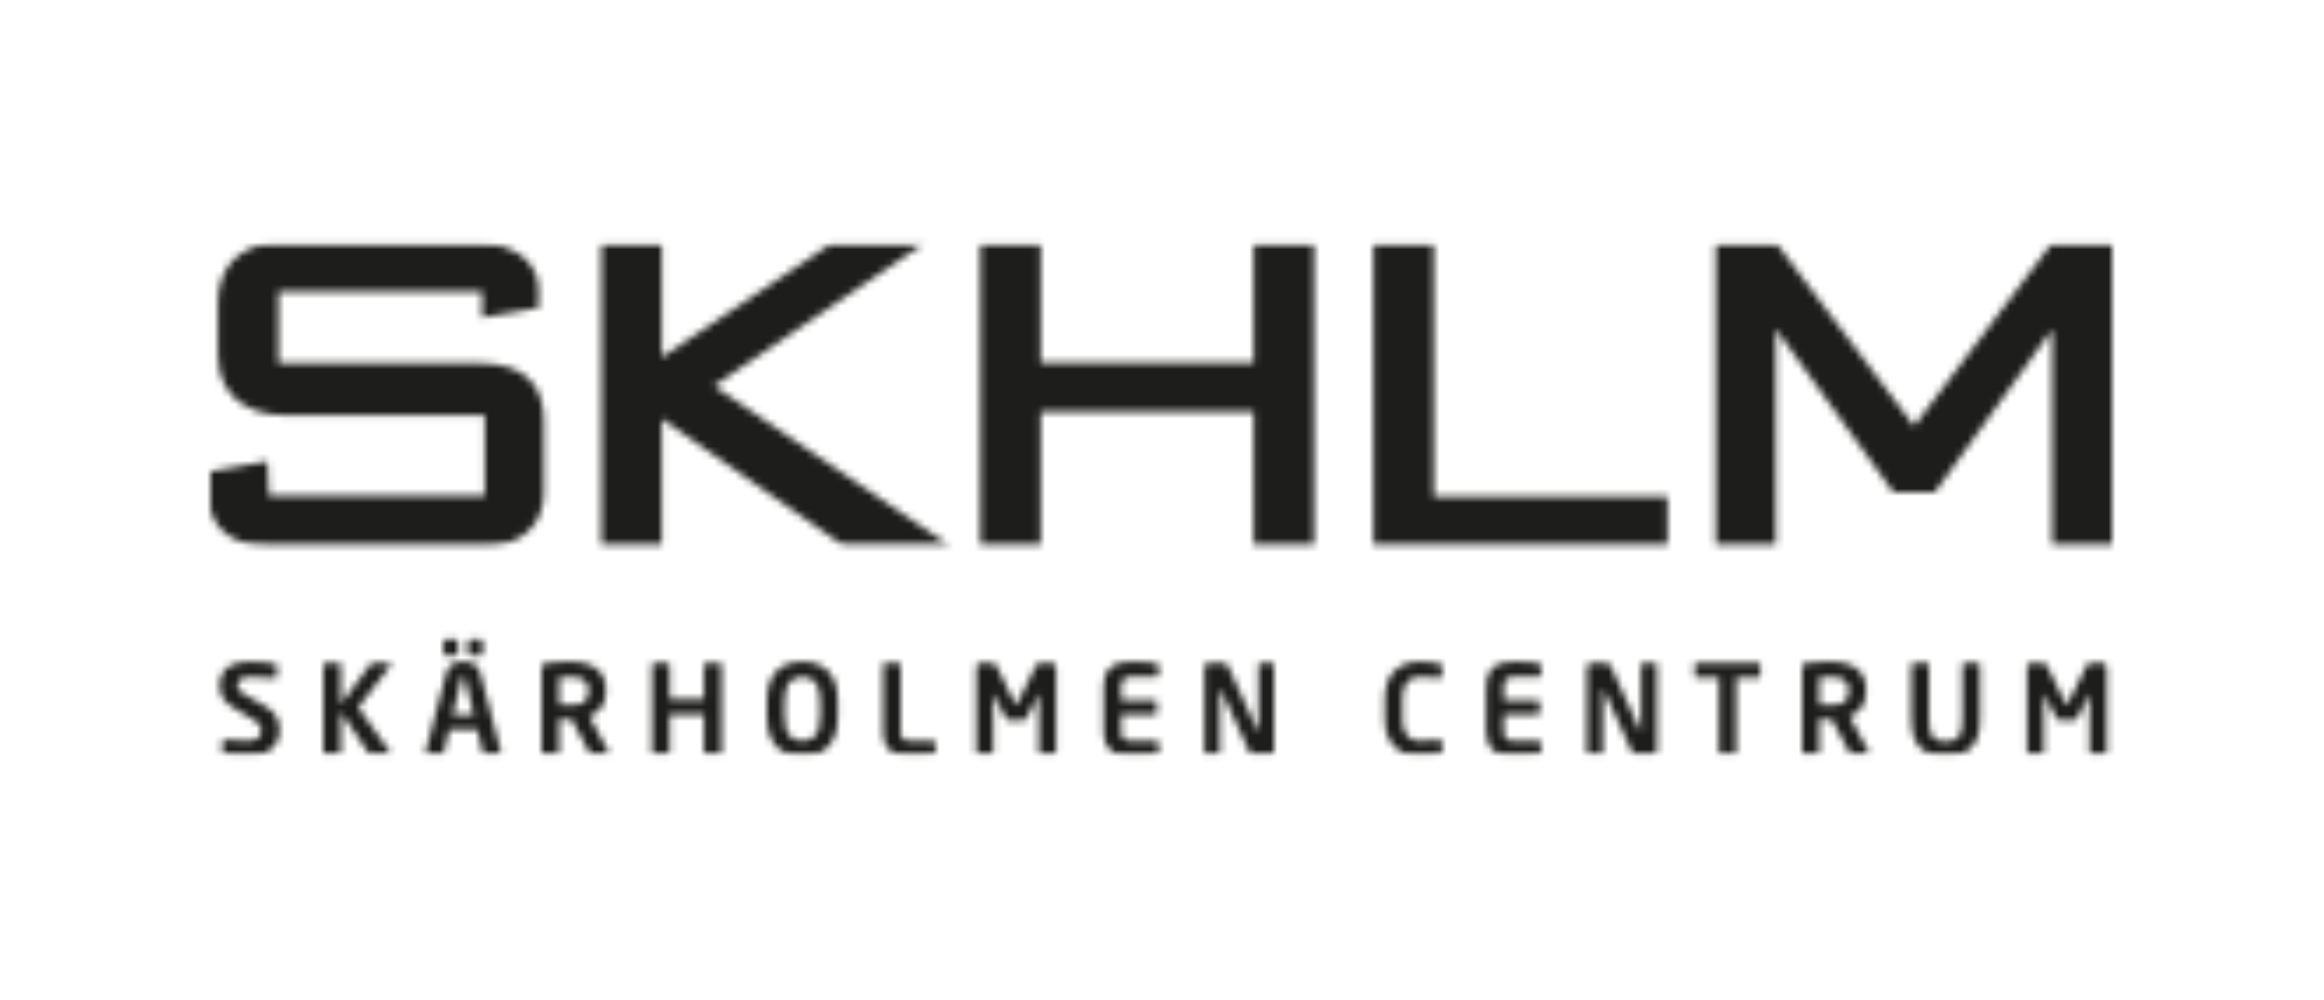 SkarholmenCentrum Logo 330x142px[96]